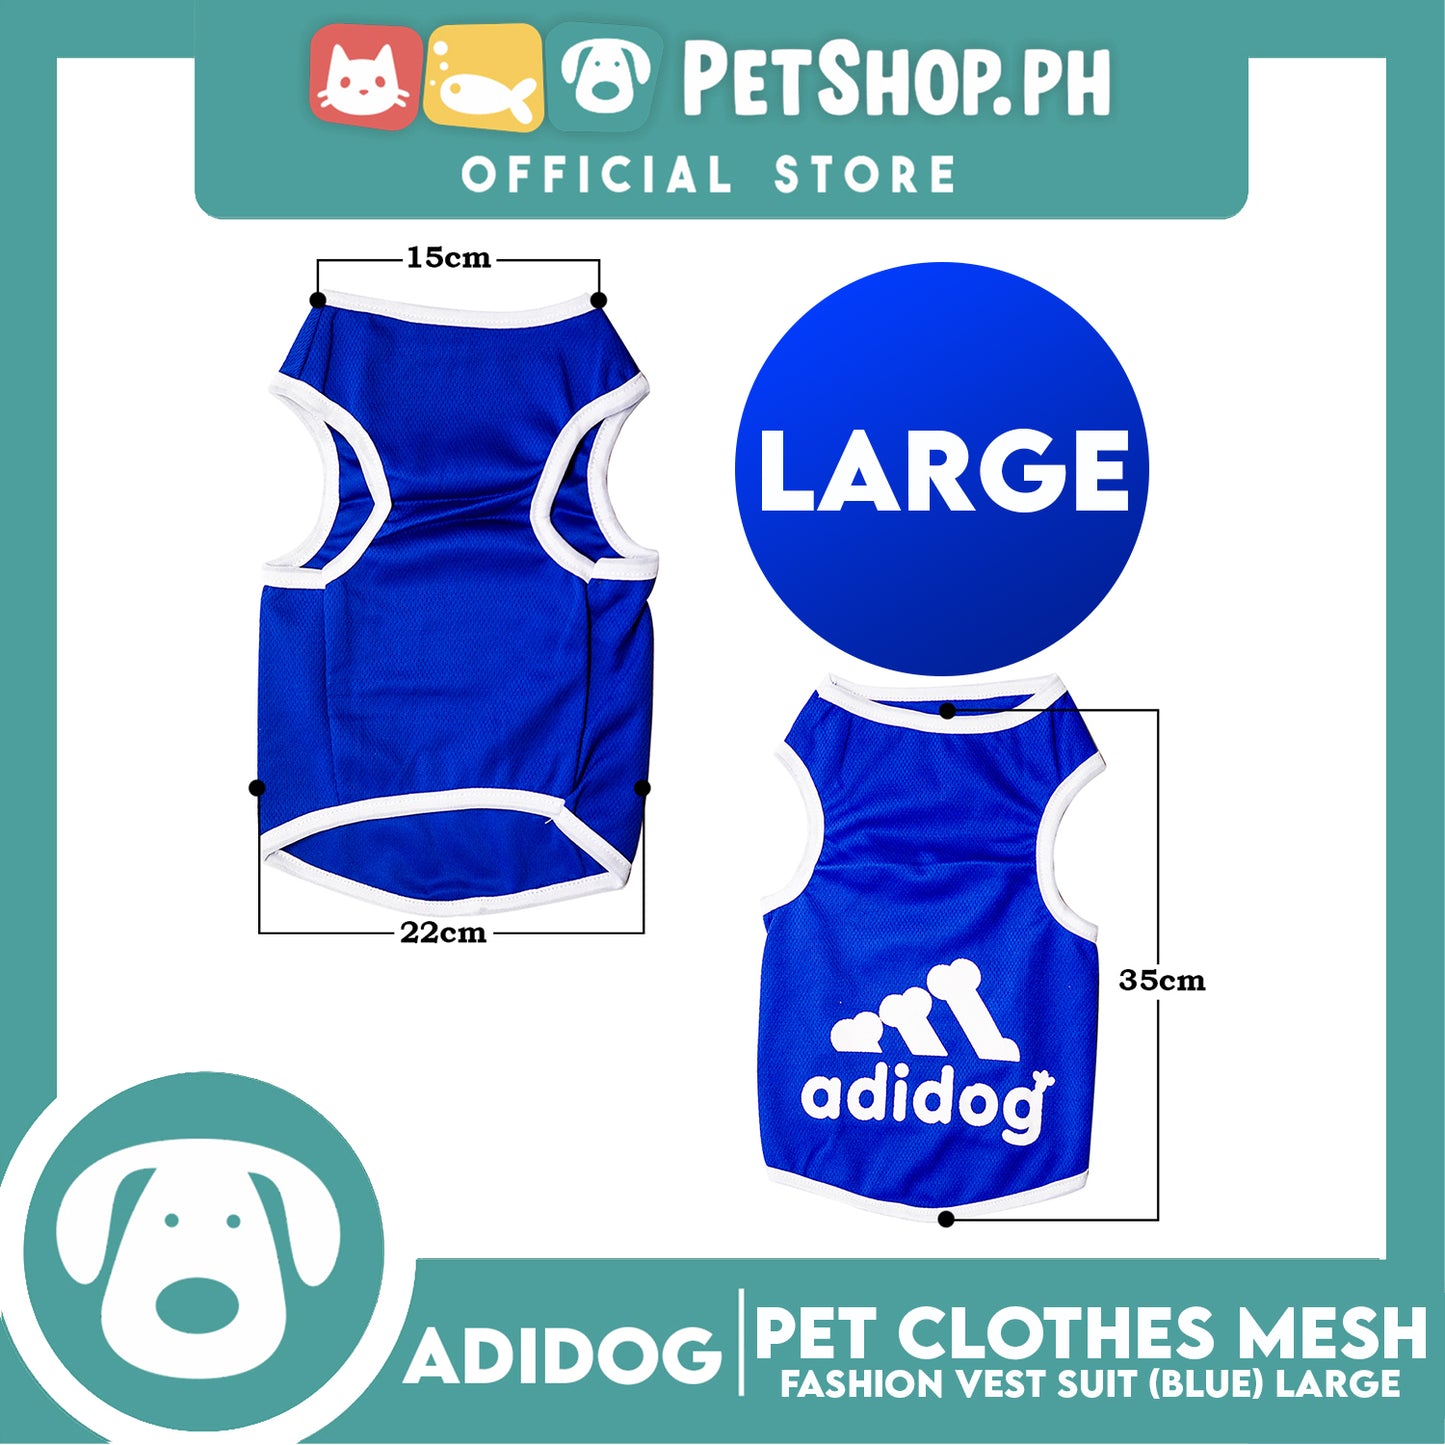 Adidog Pet Clothes Mesh Vet, Summer Dog Clothes, Breathable Mesh Vet, Dog Shirt, Pet Jersey, Fashion Vest Suit for Dogs (Blue) (Large)